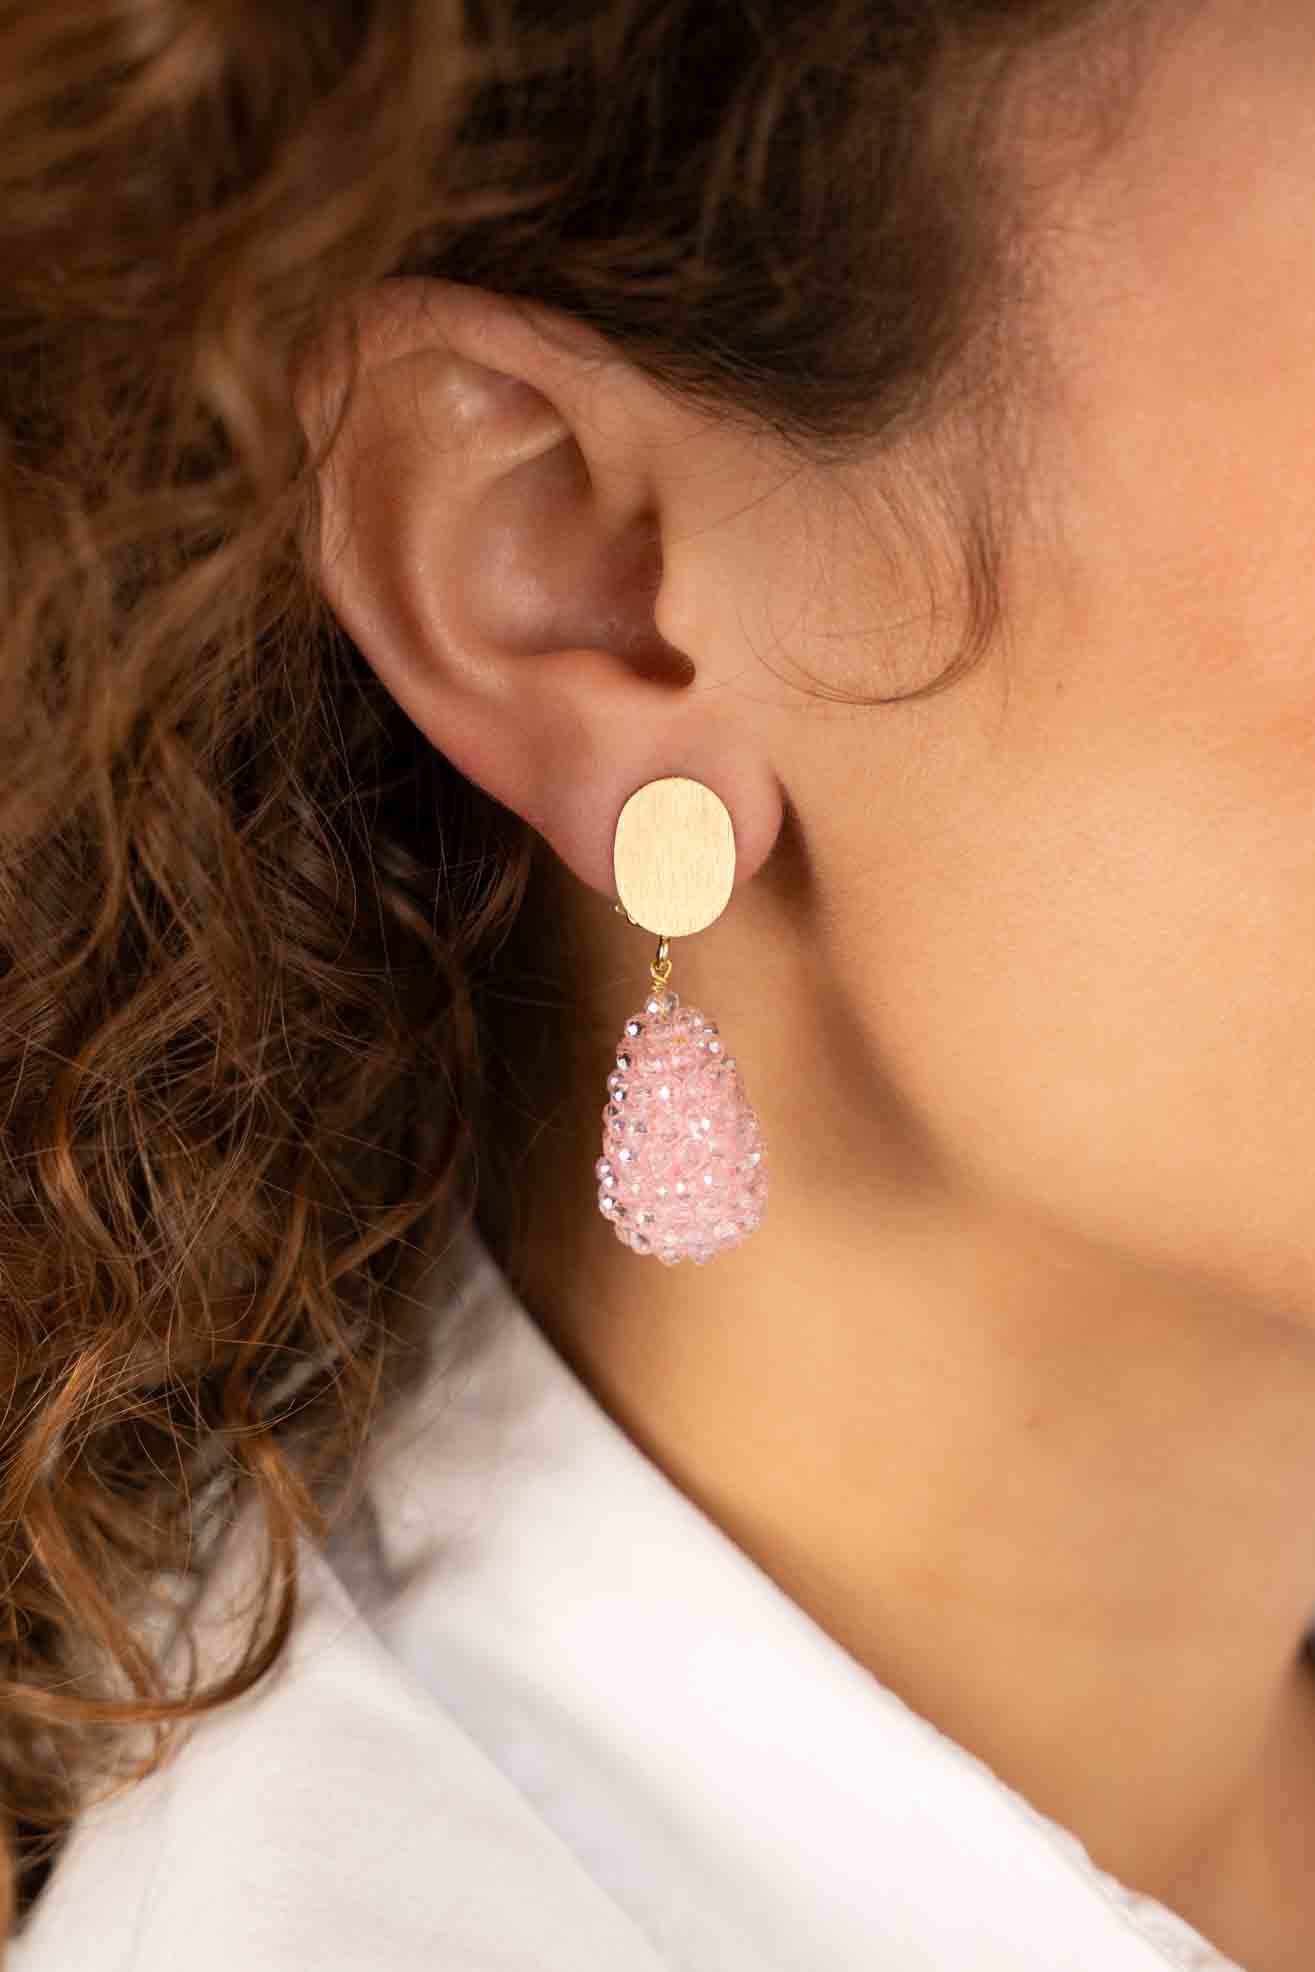 Soft Pink Earrings Amy Cone XS Cliplott-theme.productDescriptionPage.SEO.byTheBrand